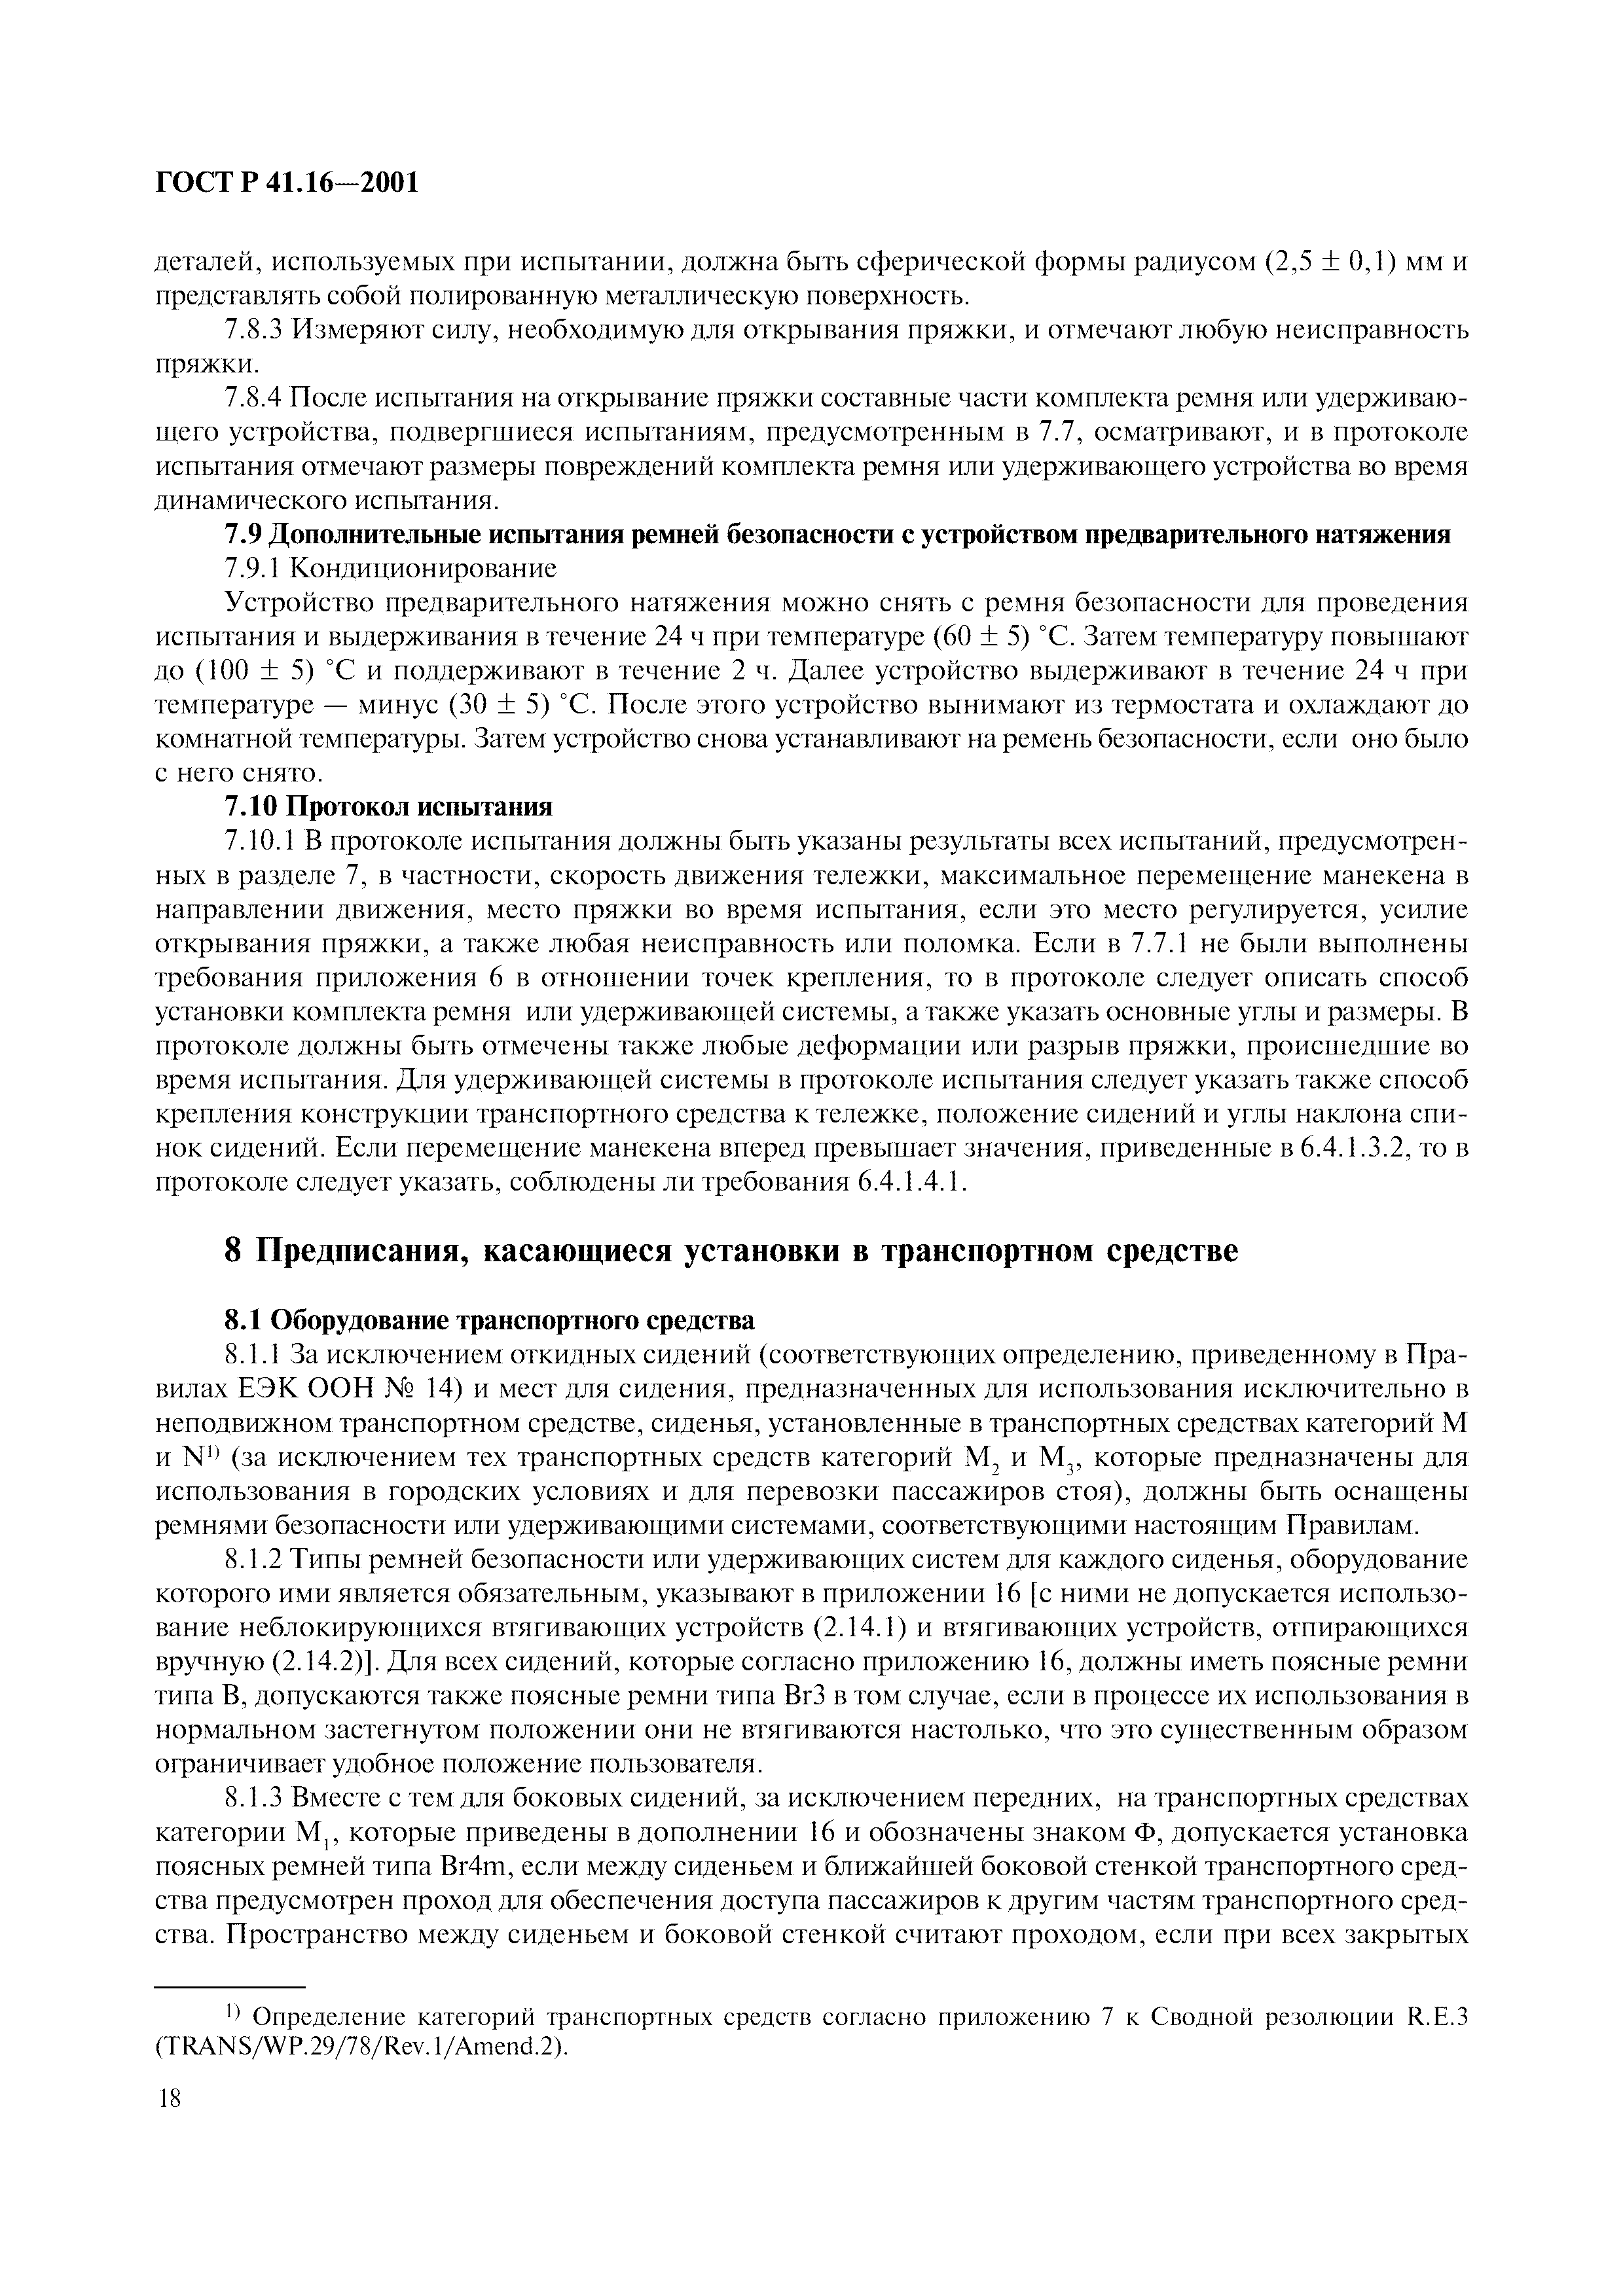 ГОСТ Р 41.16-2001. Страница 21